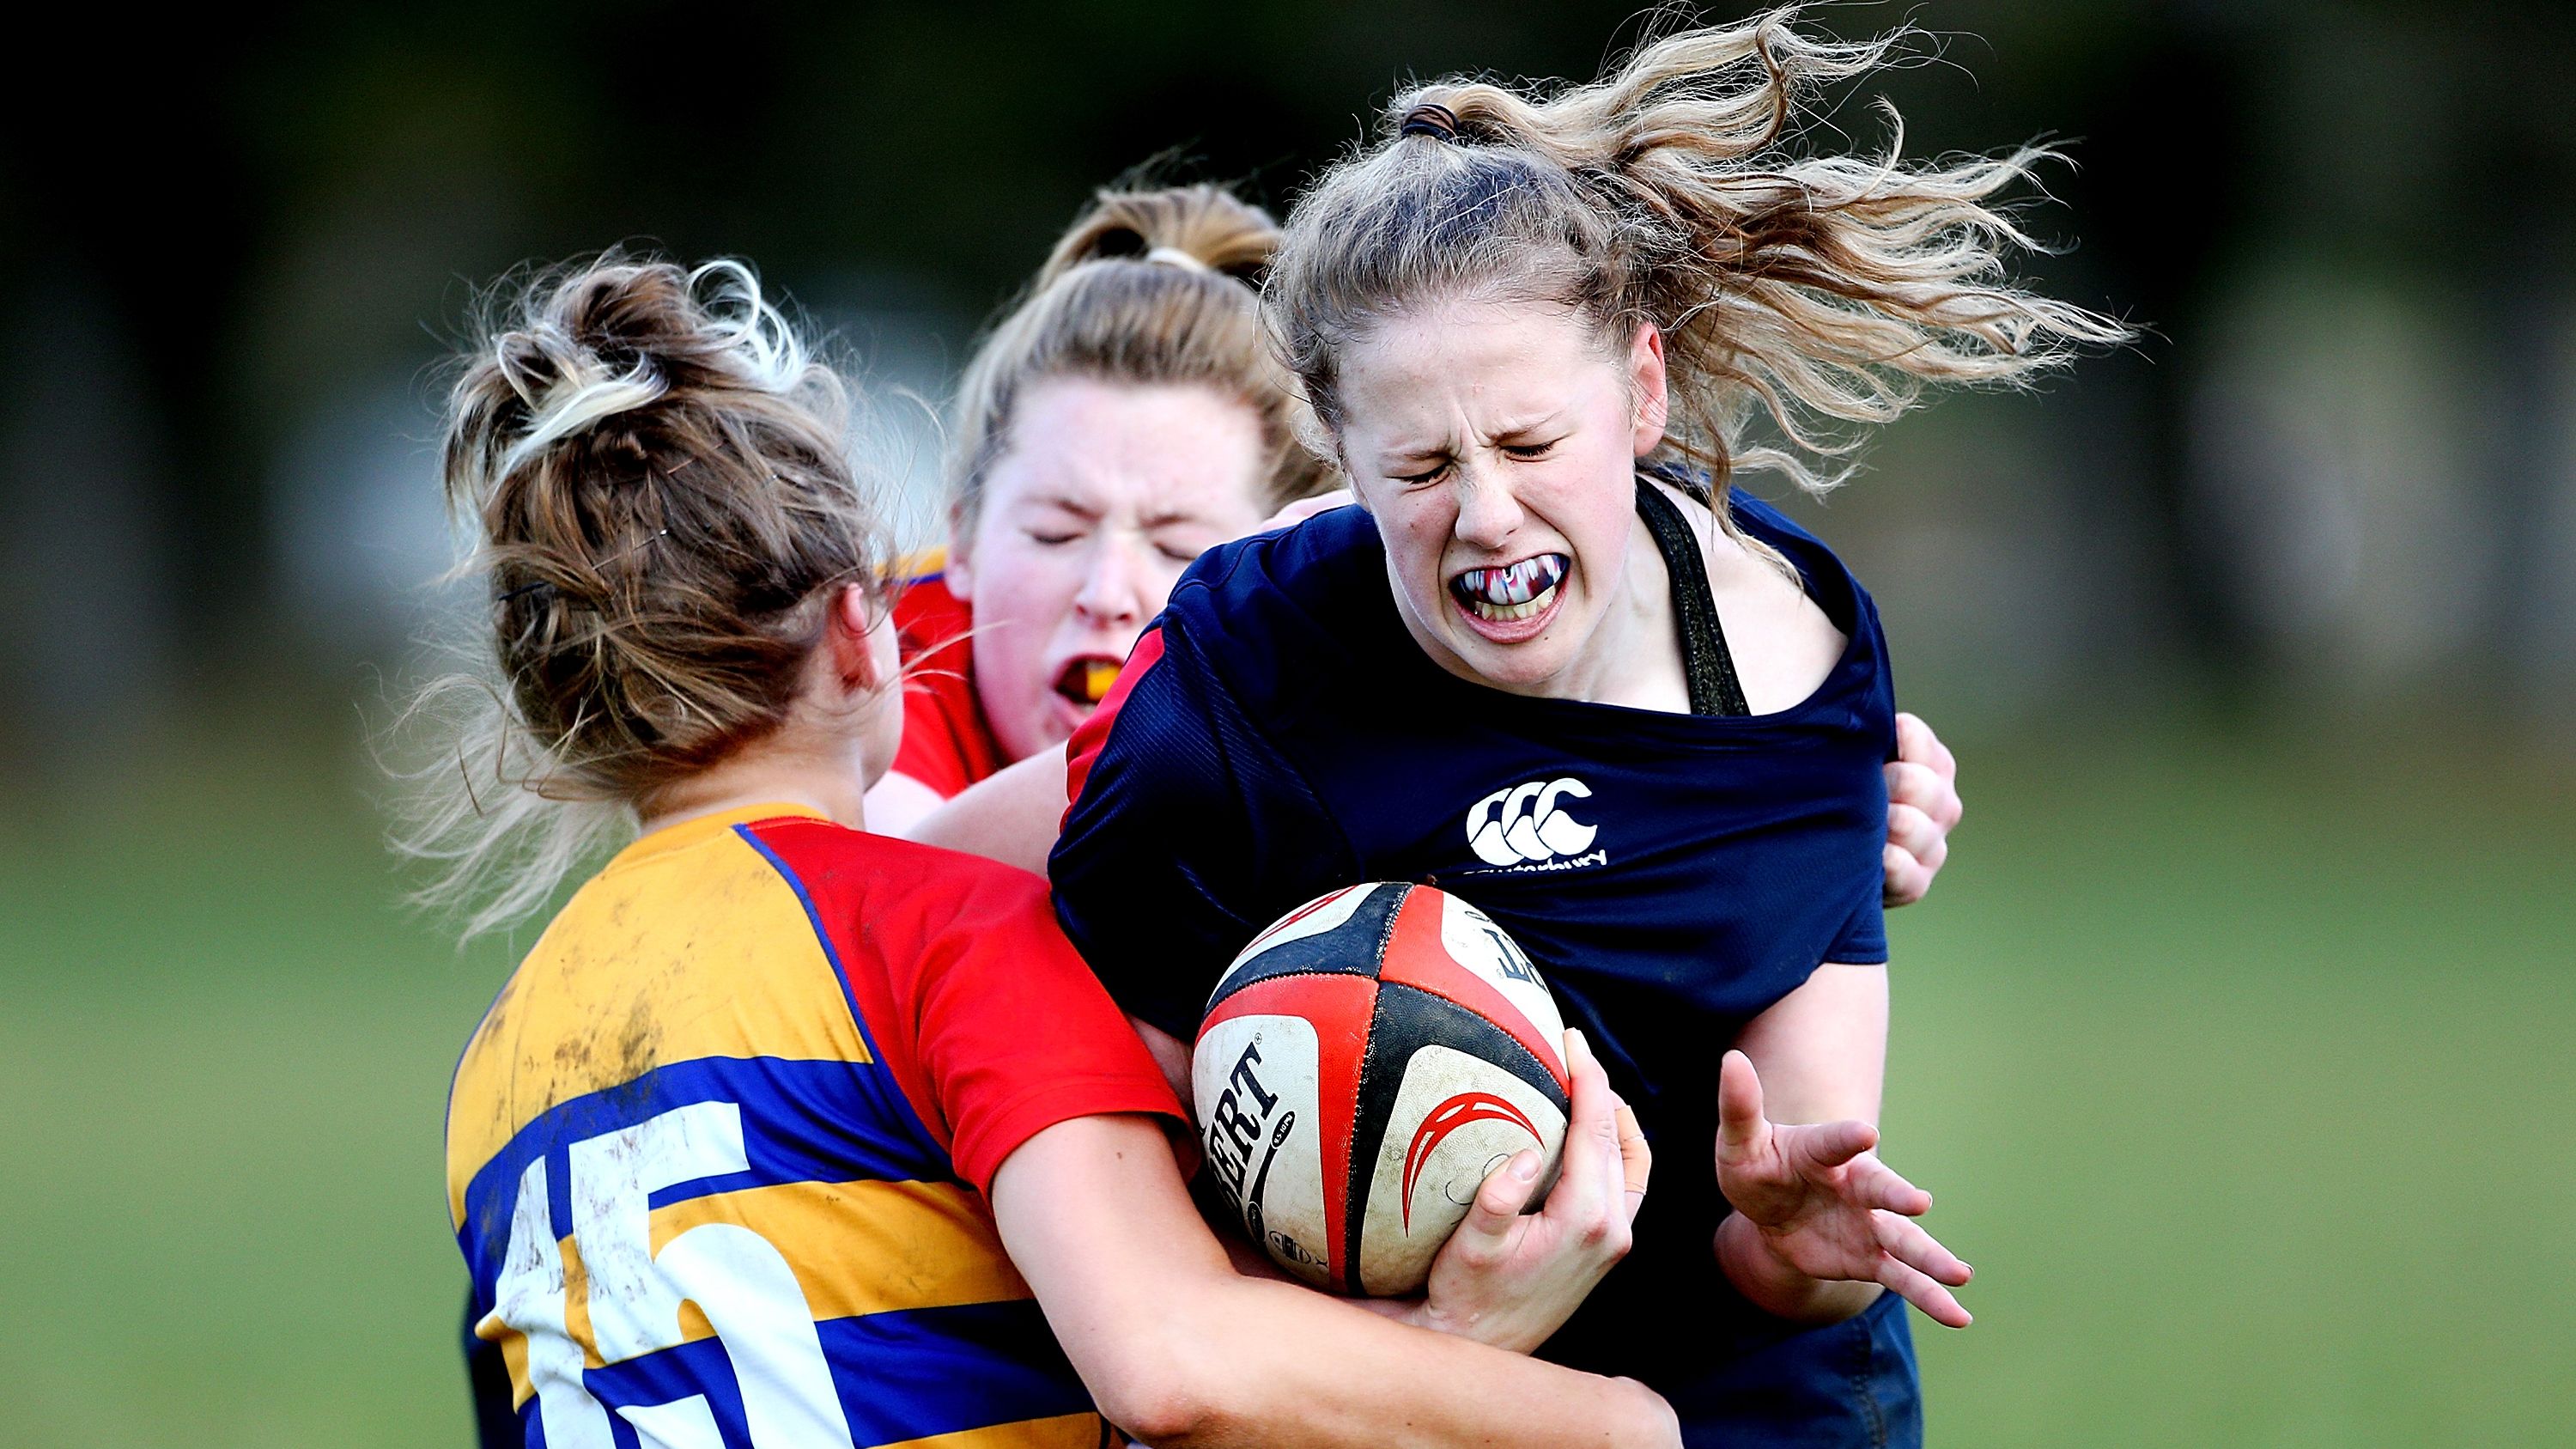 Schools rugby in New Zealand.